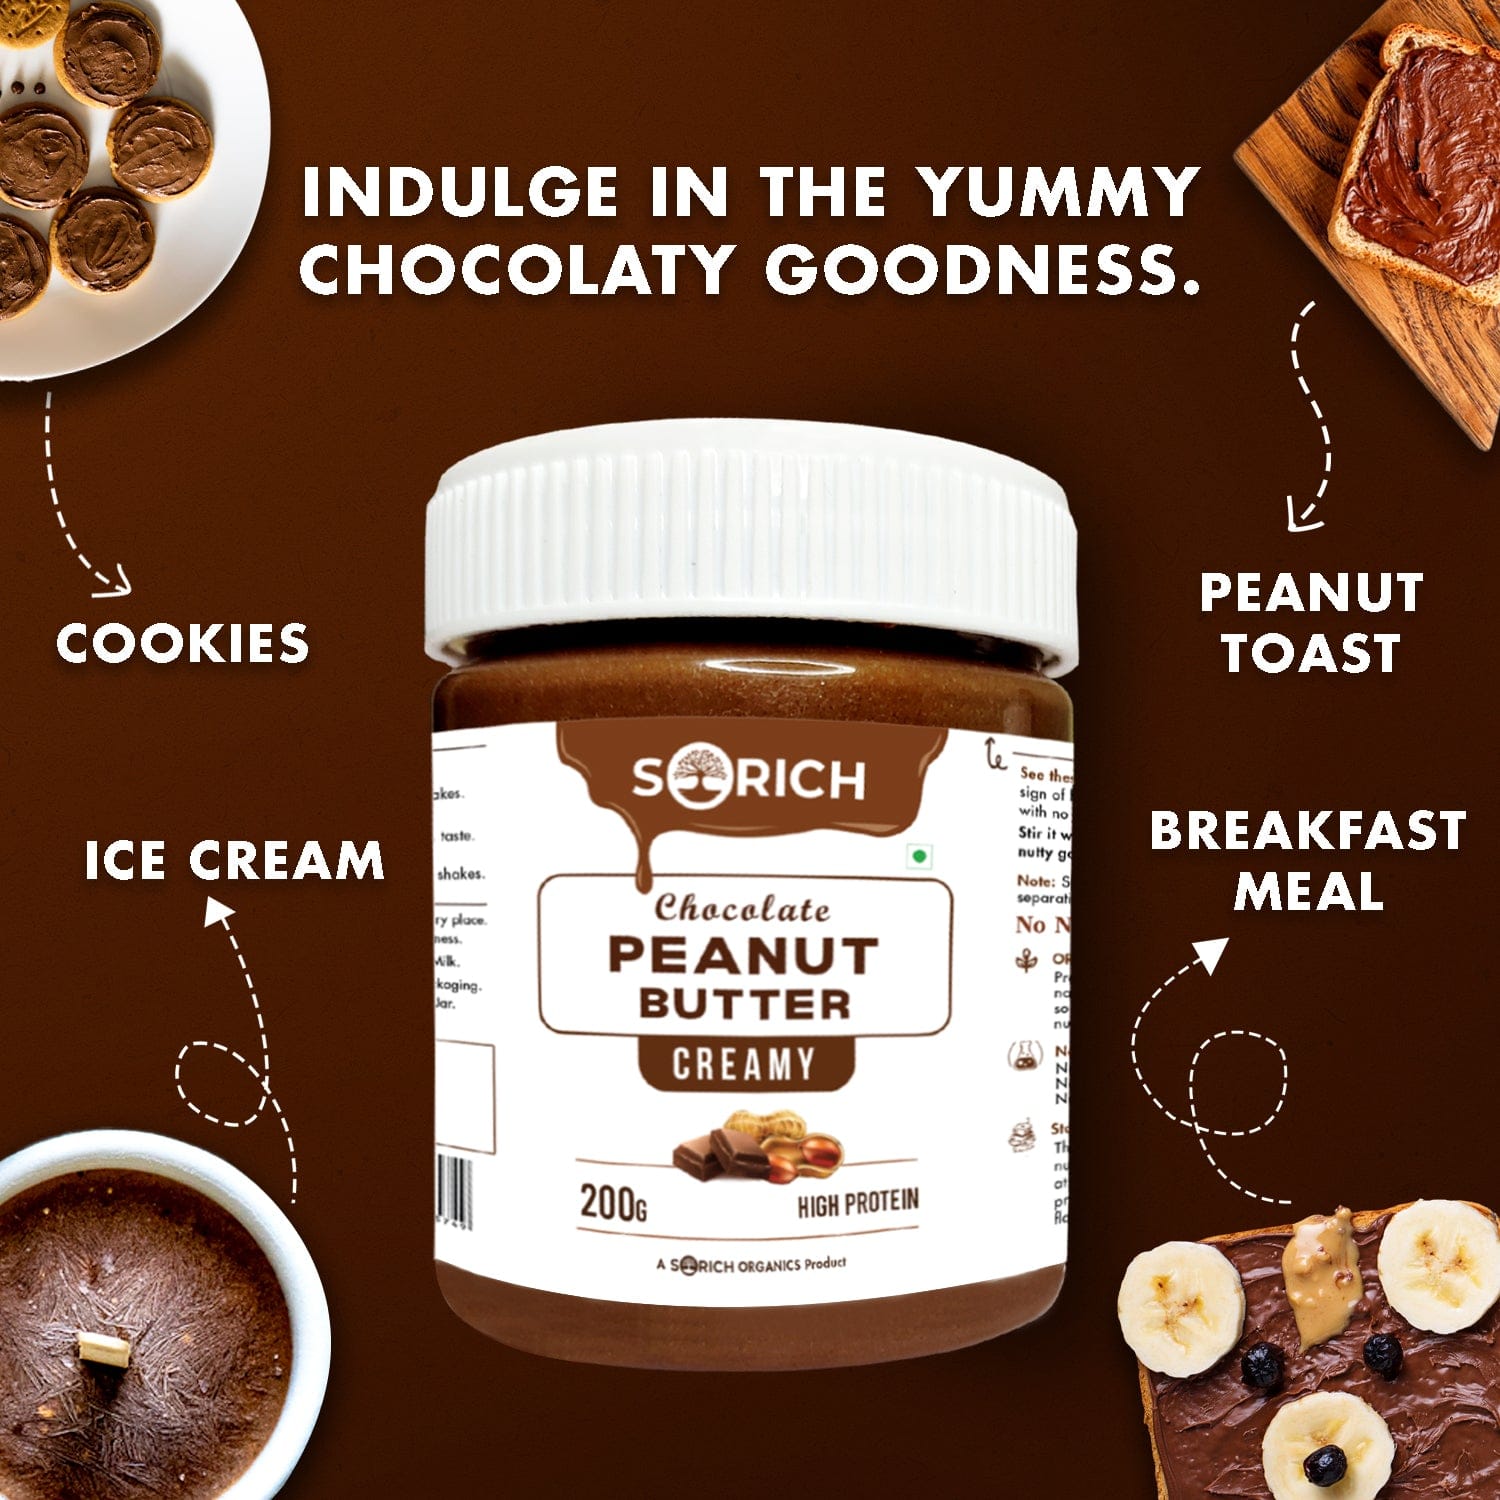 chocolate peanut butter creamy uses